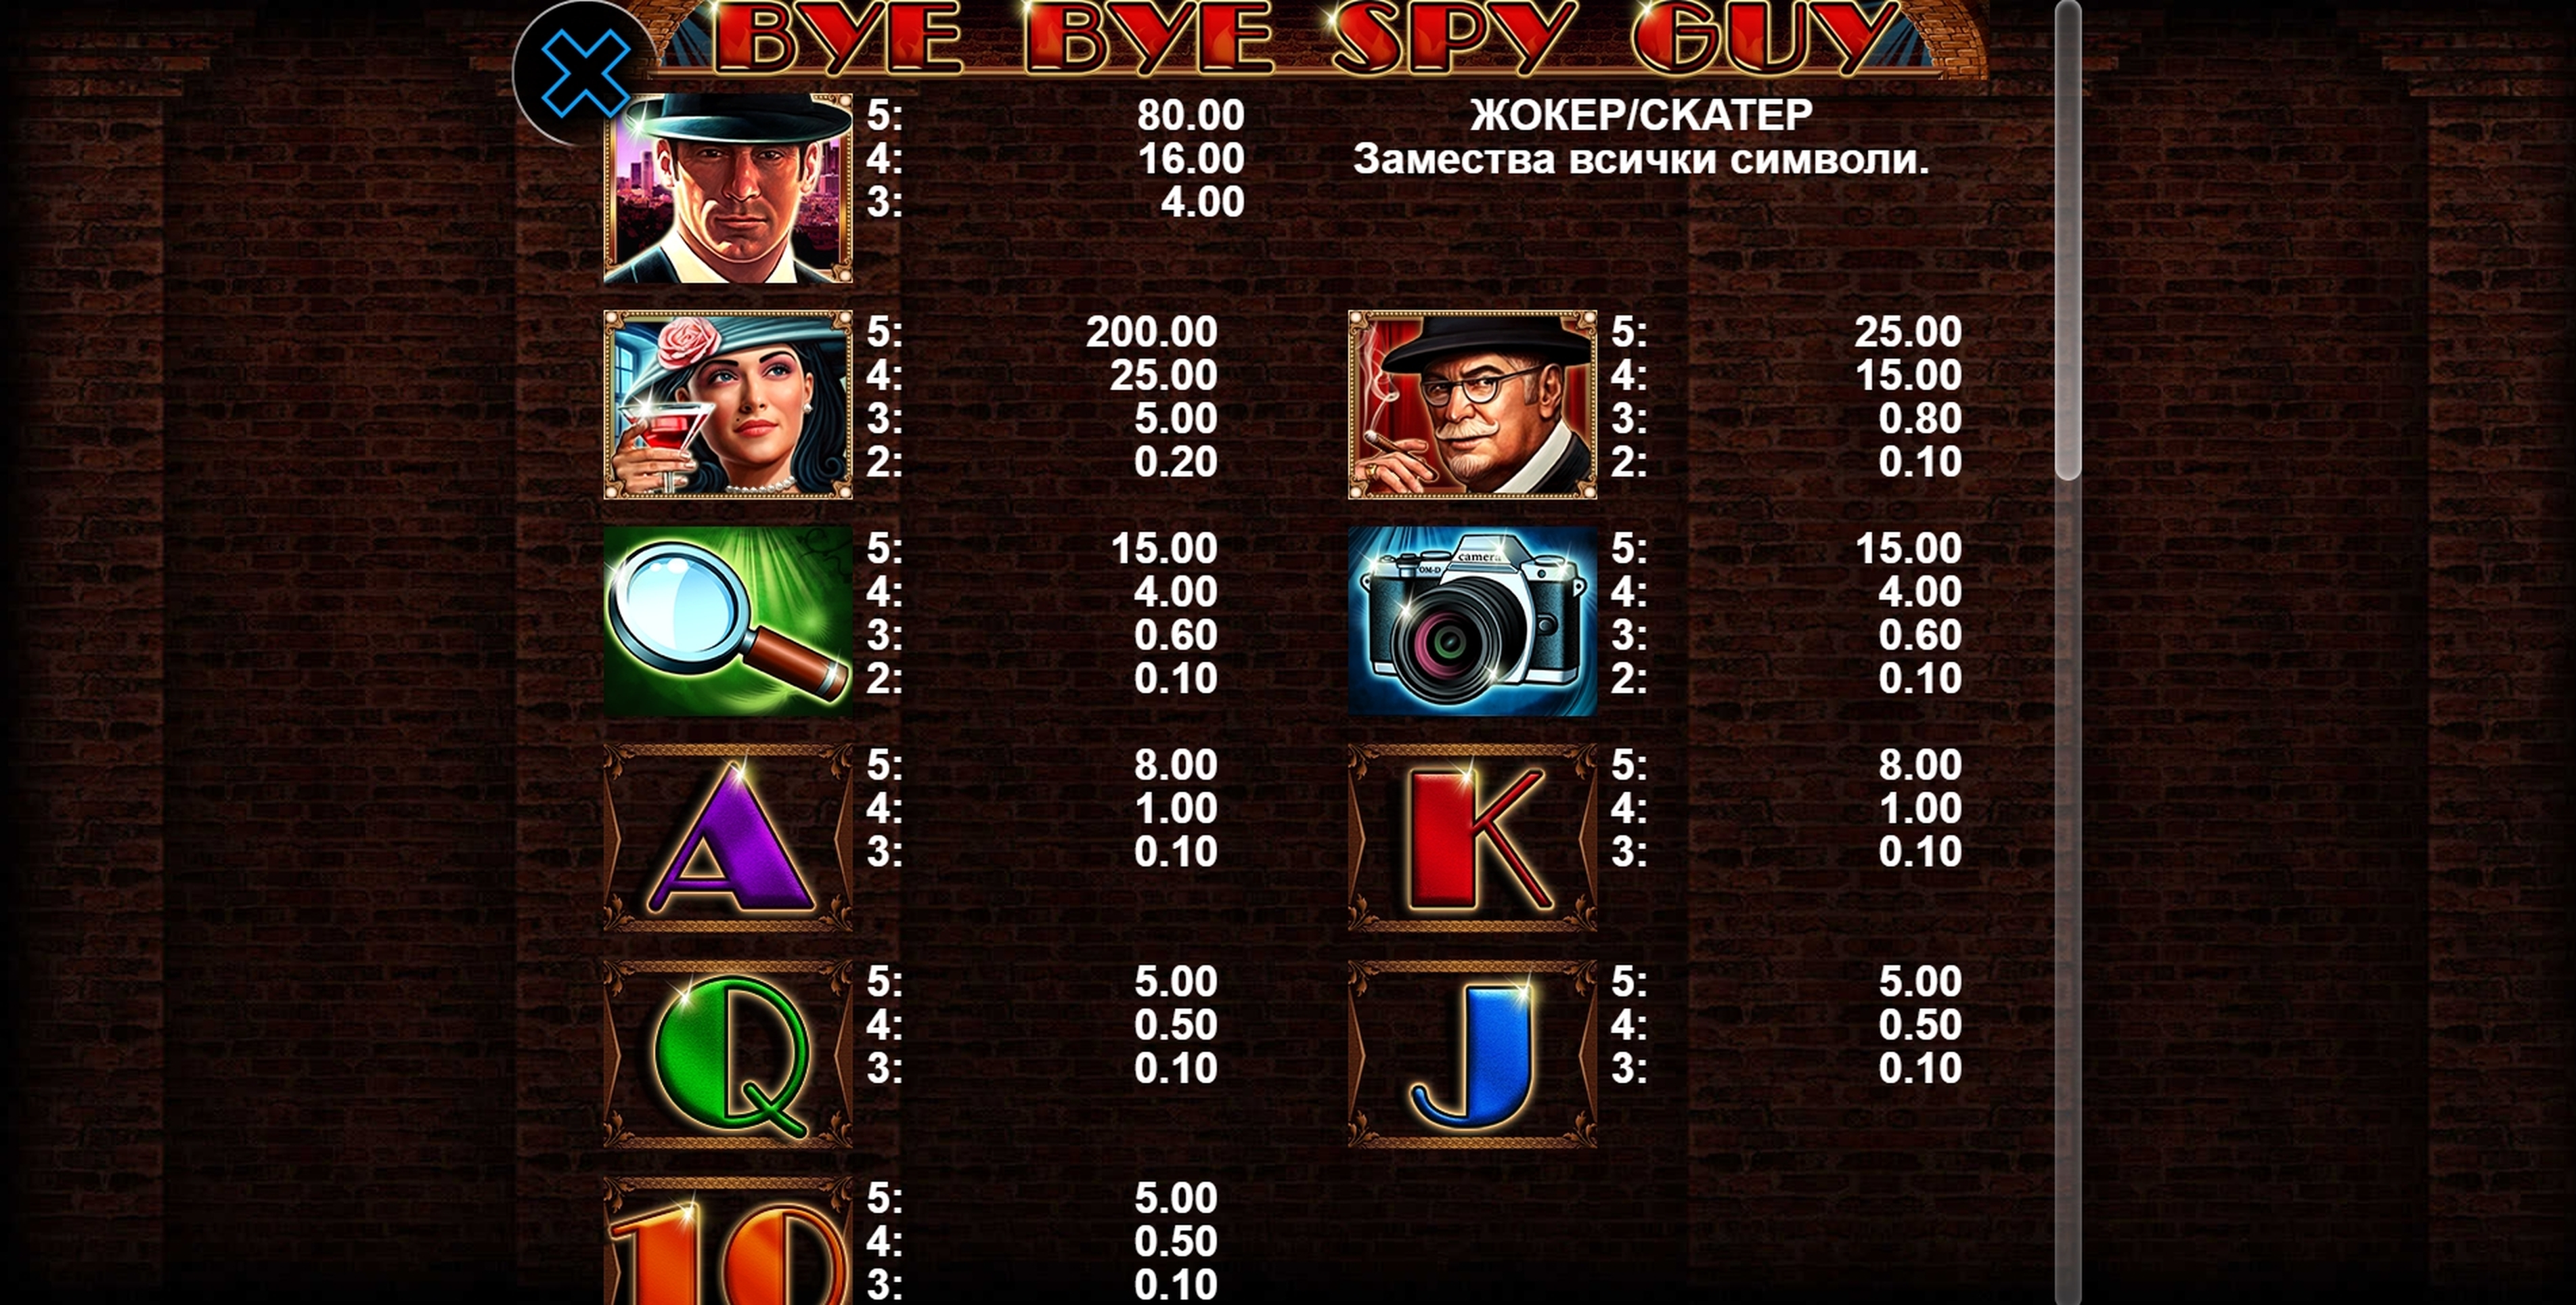 Info of Bye Bye Spy Guy Slot Game by casino technology